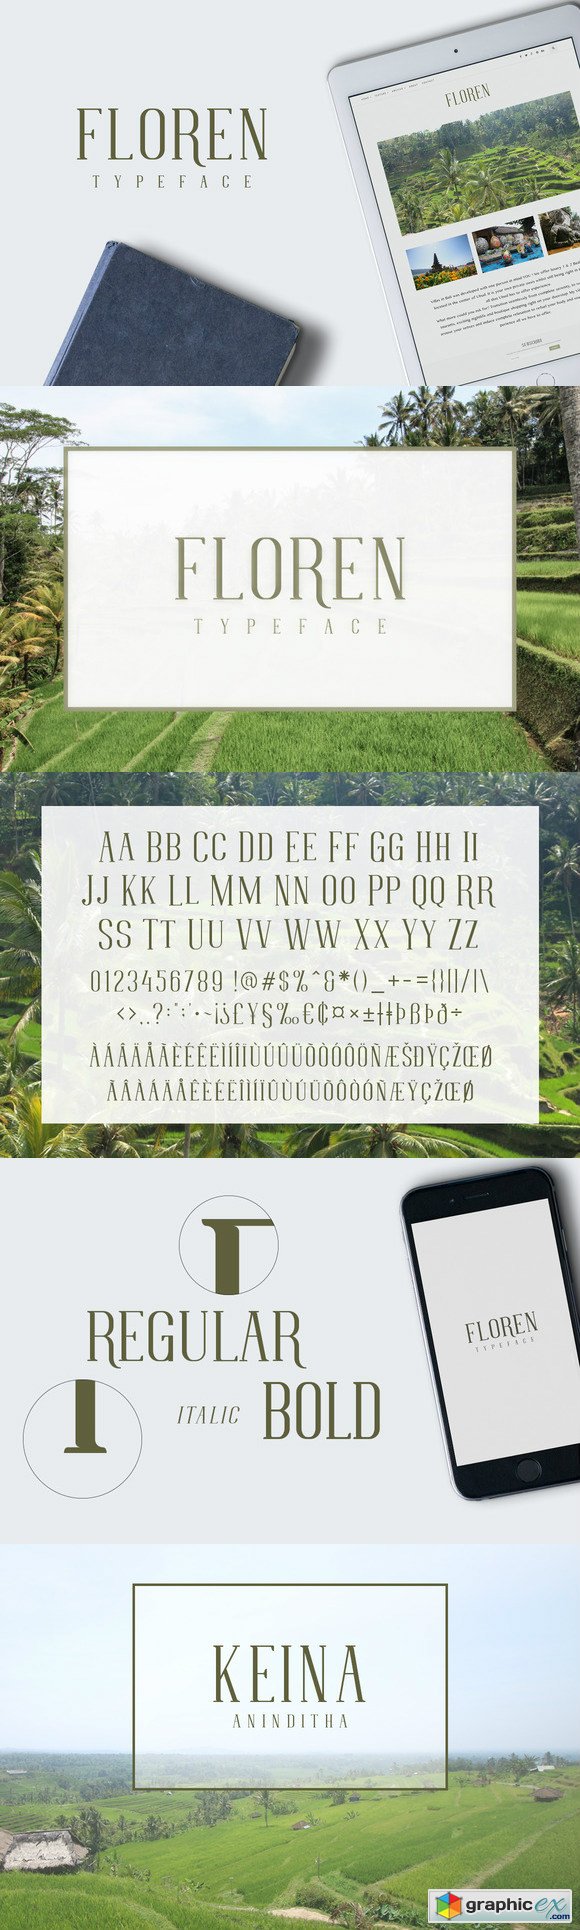 Floren Typeface